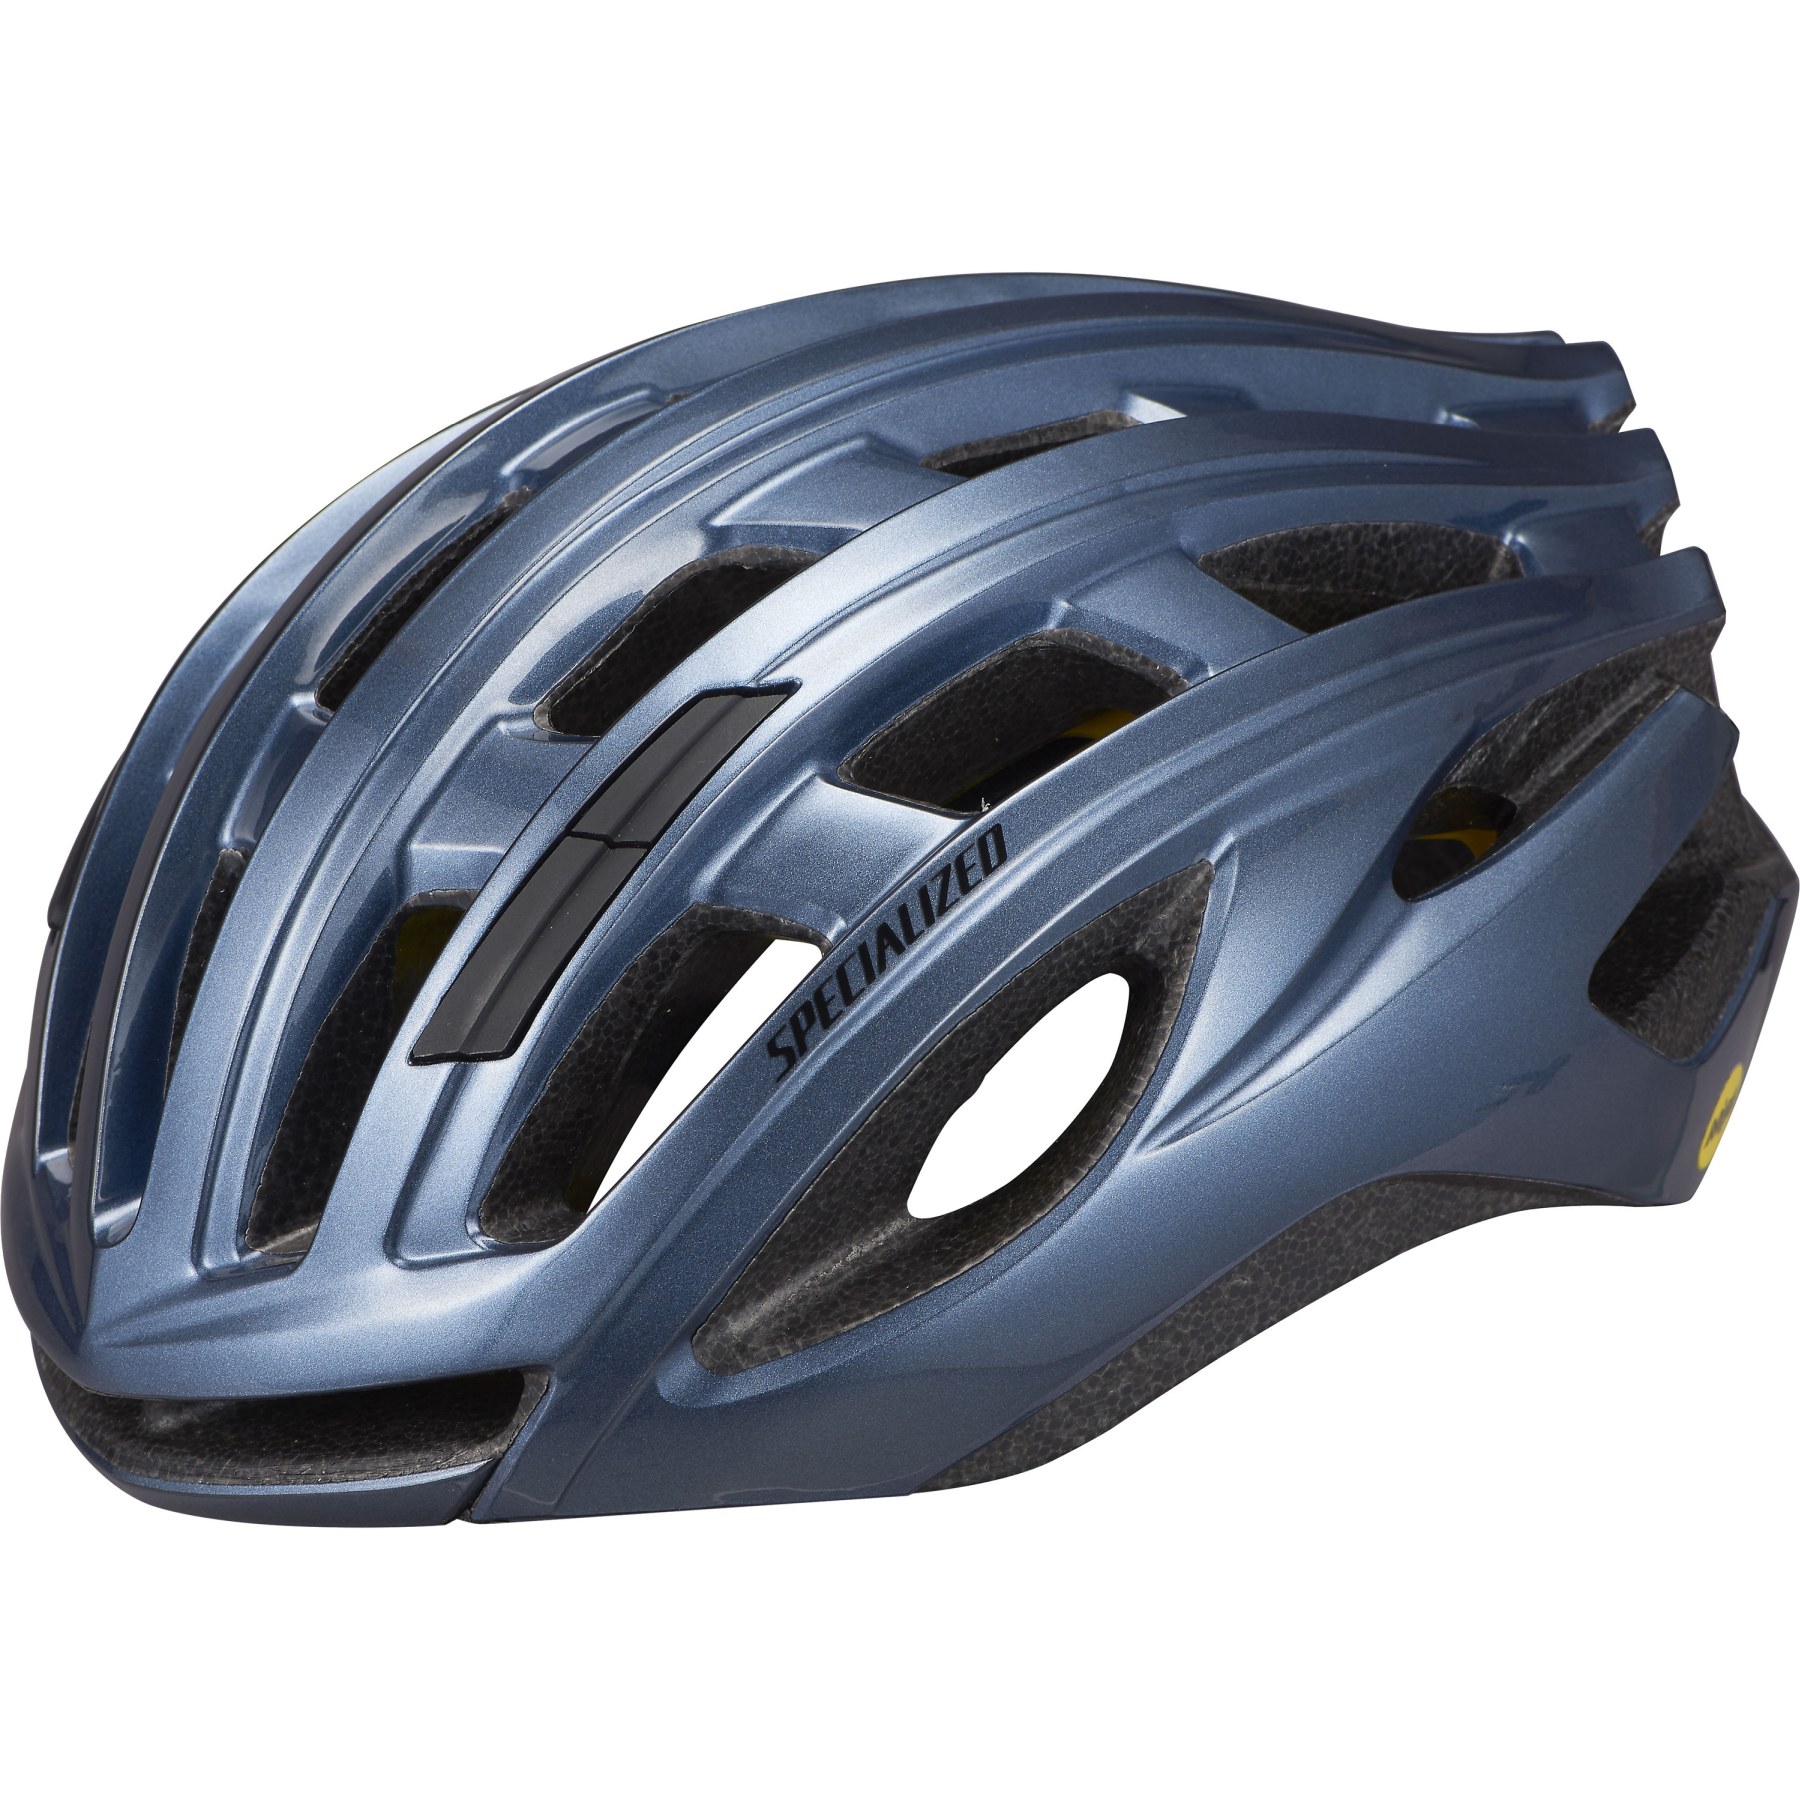 Picture of Specialized Propero III Road Helmet - Gloss Cast Blue Metallic